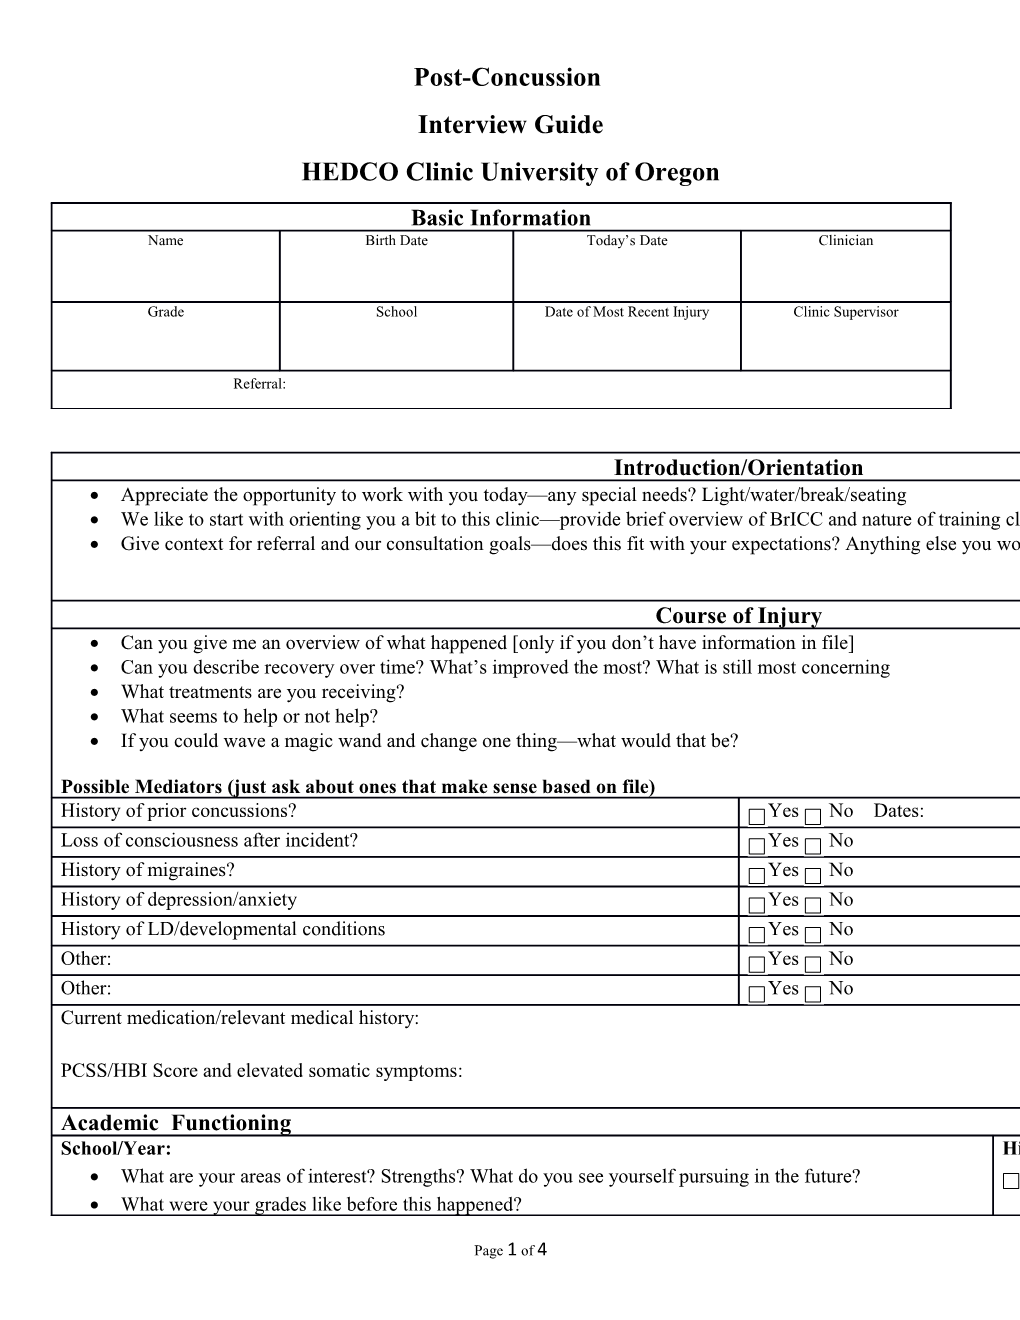 HEDCO Clinic University of Oregon